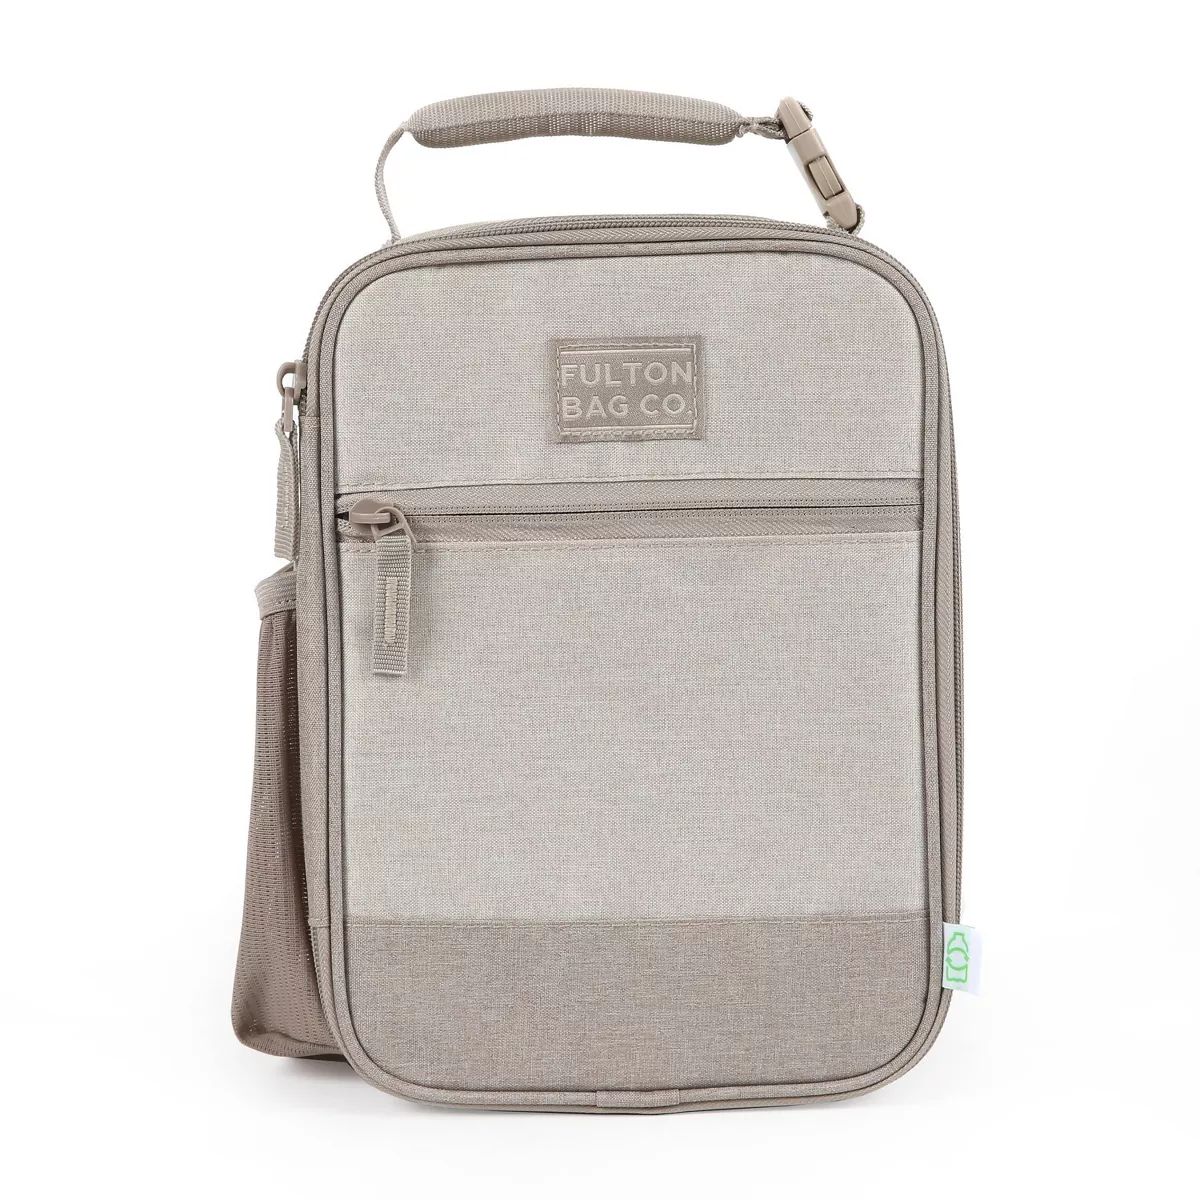 Fulton Bag Co. Upright Lunch Bag - Stone | Target